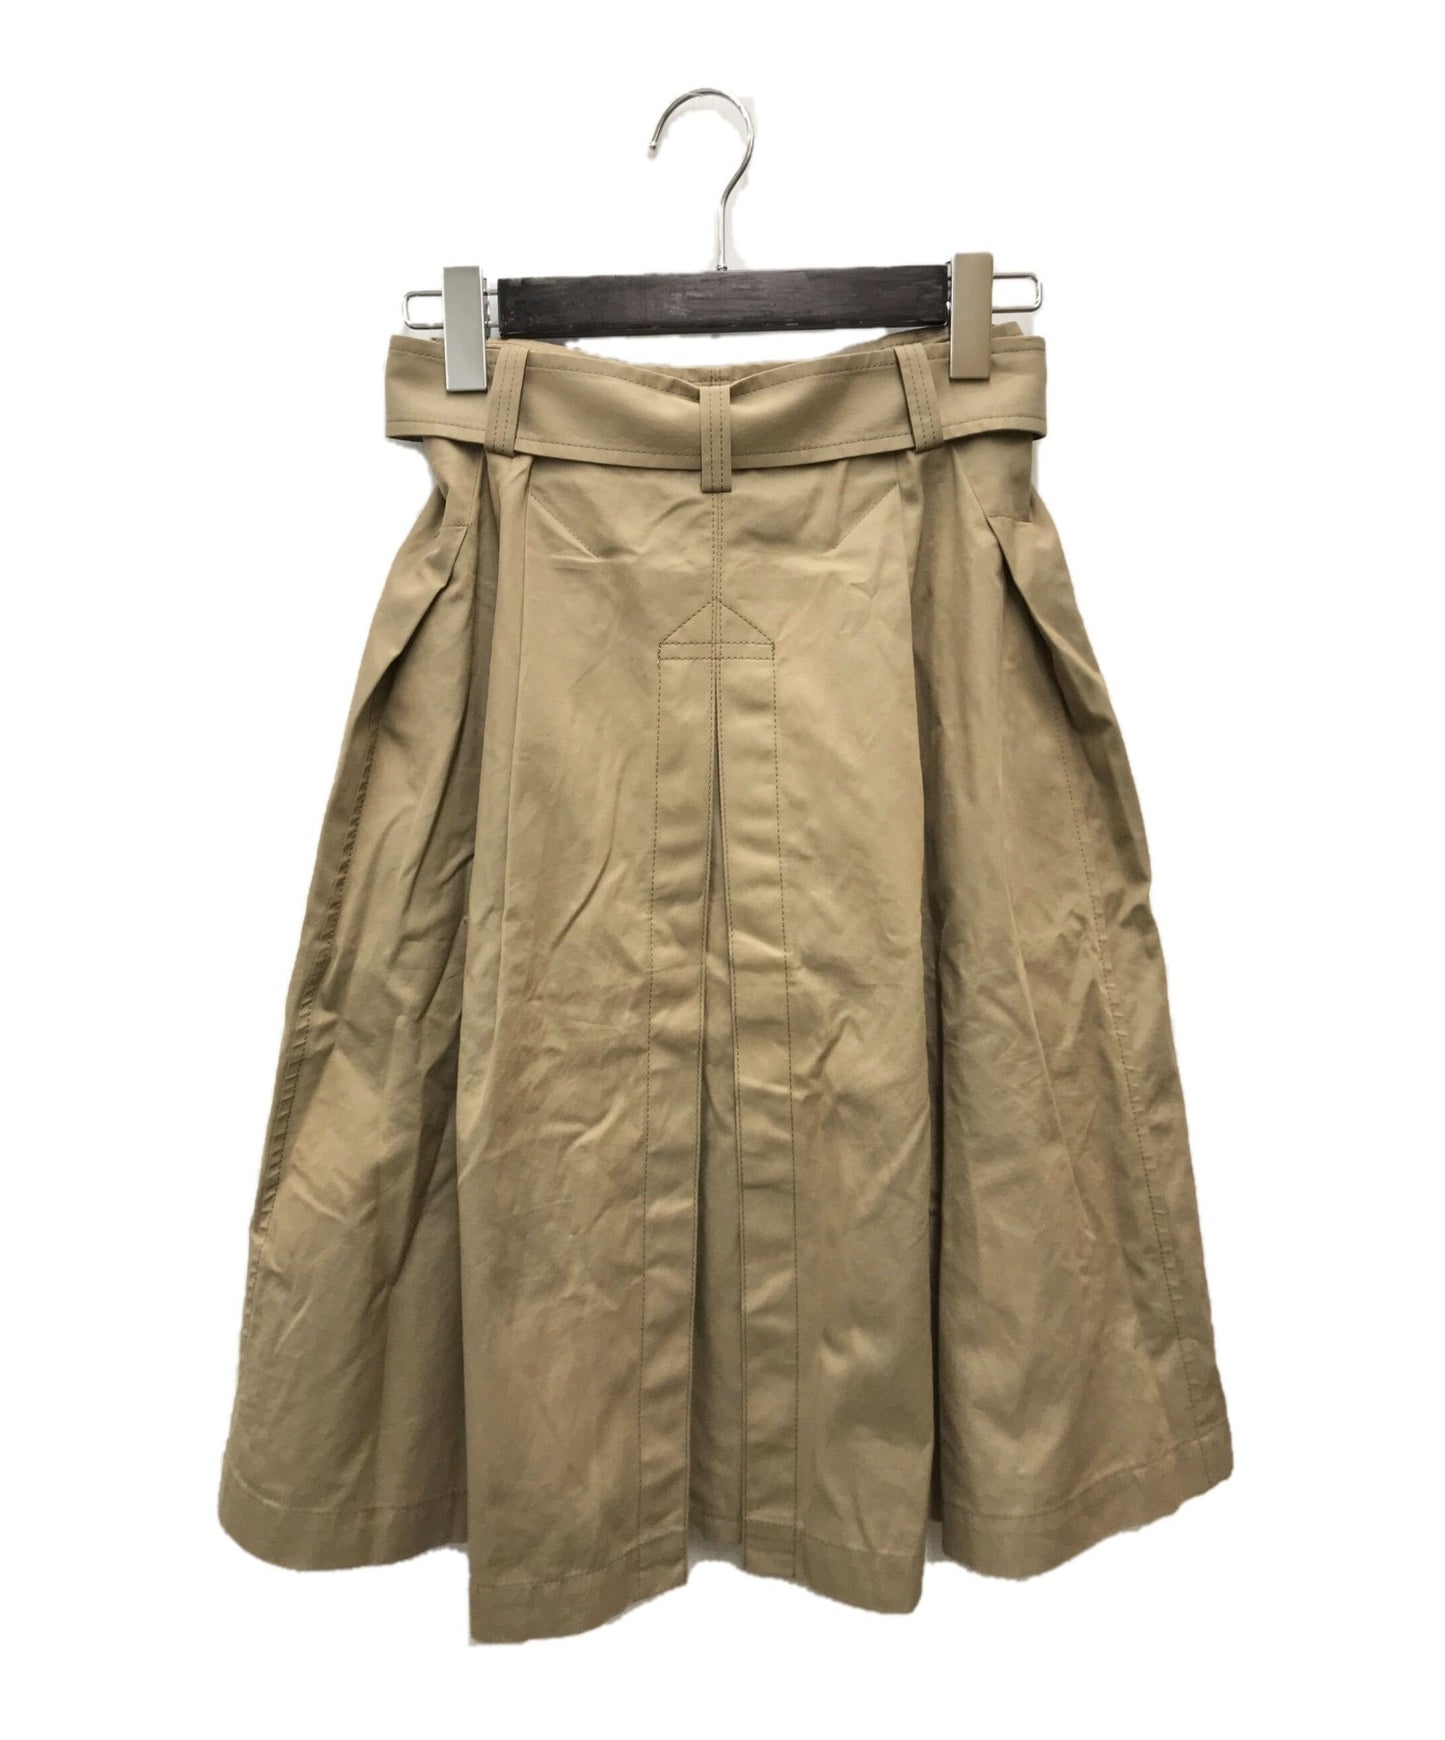 Comme des Garcons Junya Watanabe Back Tuck Design Skirt AC2016 JS-S032